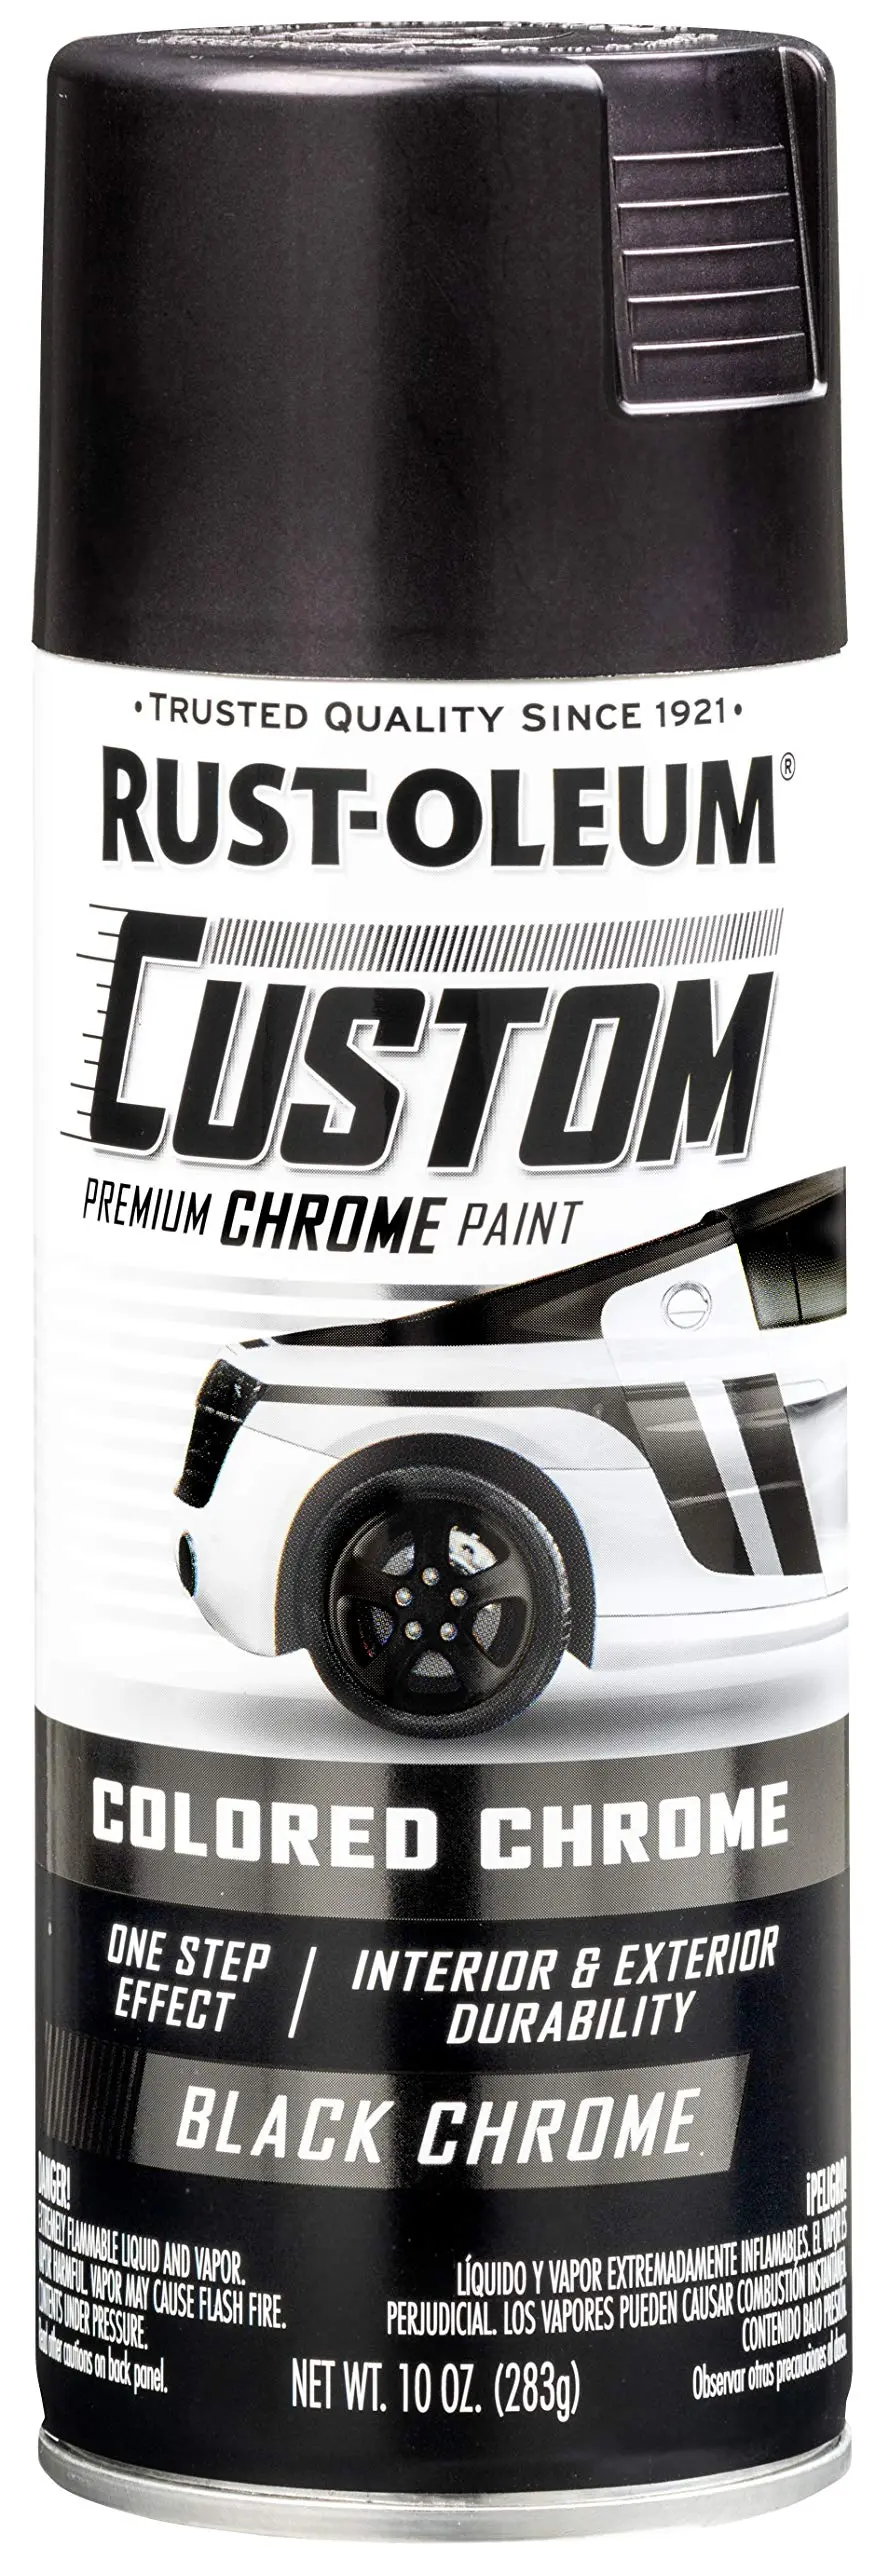 smoked chrome spray paint - Is Chrome spray paint actually Chrome